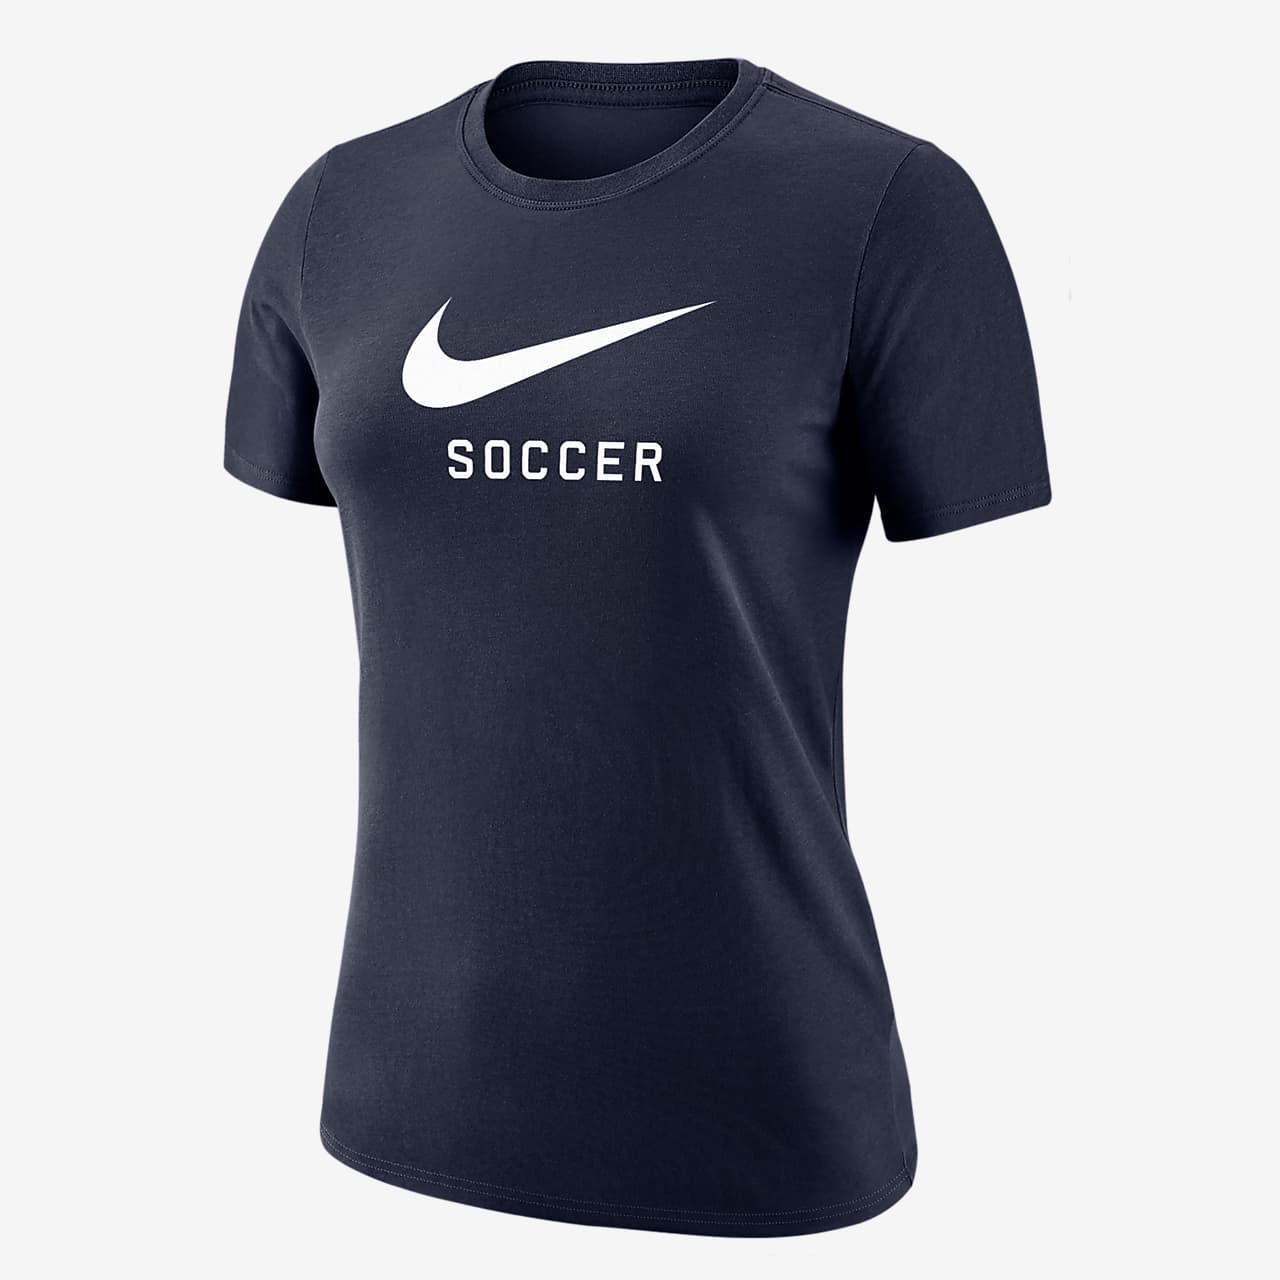 Nike Swoosh Women's Soccer Short-Sleeve T-Shirt.